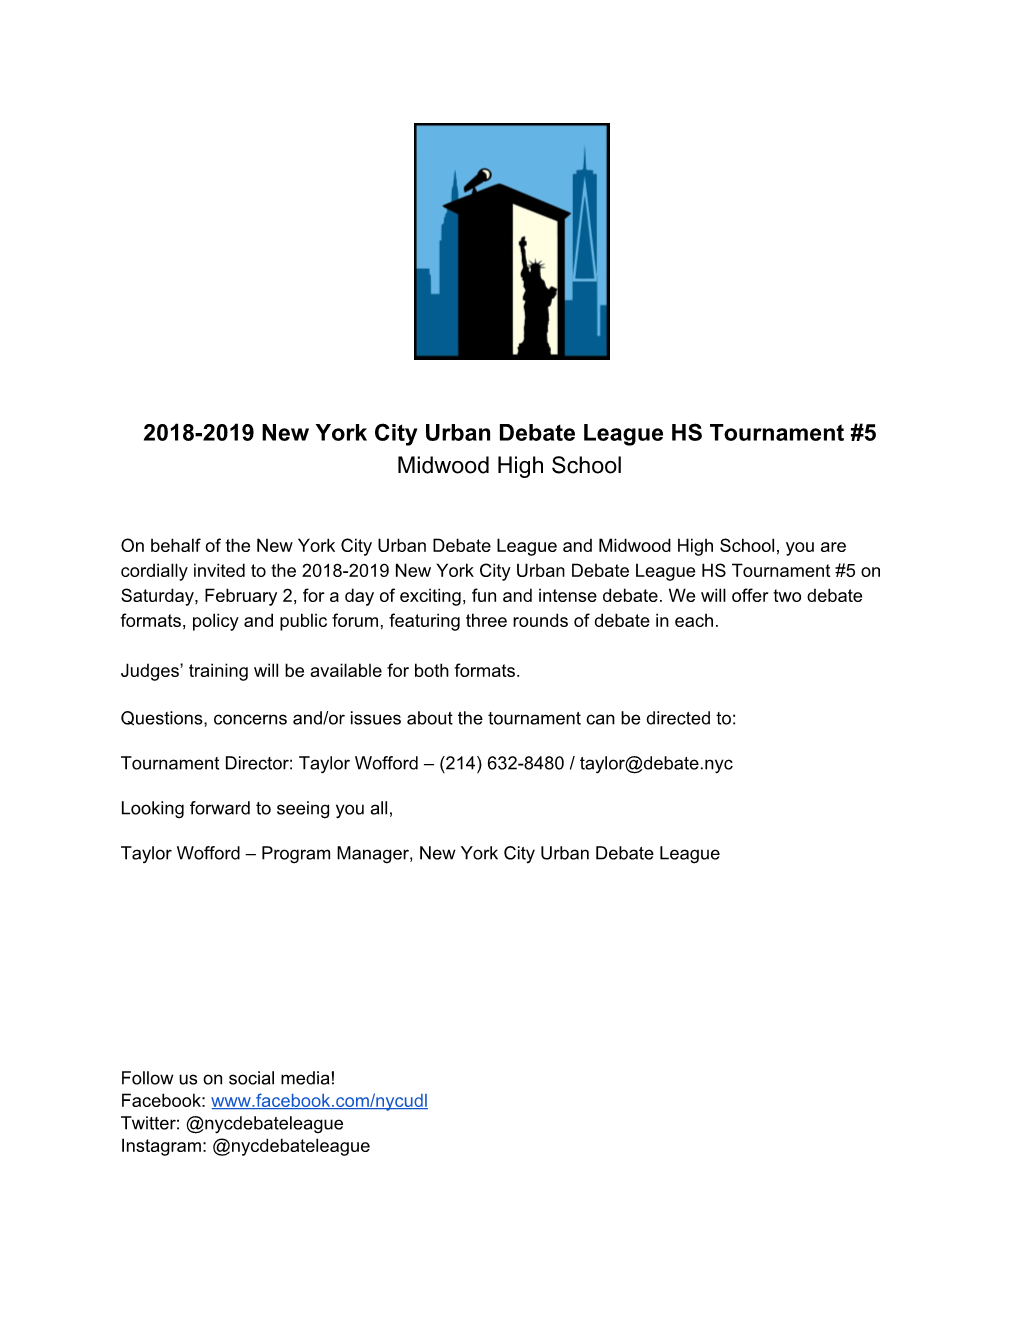 2018-2019 New York City Urban Debate League HS Tournament #5 Midwood High School